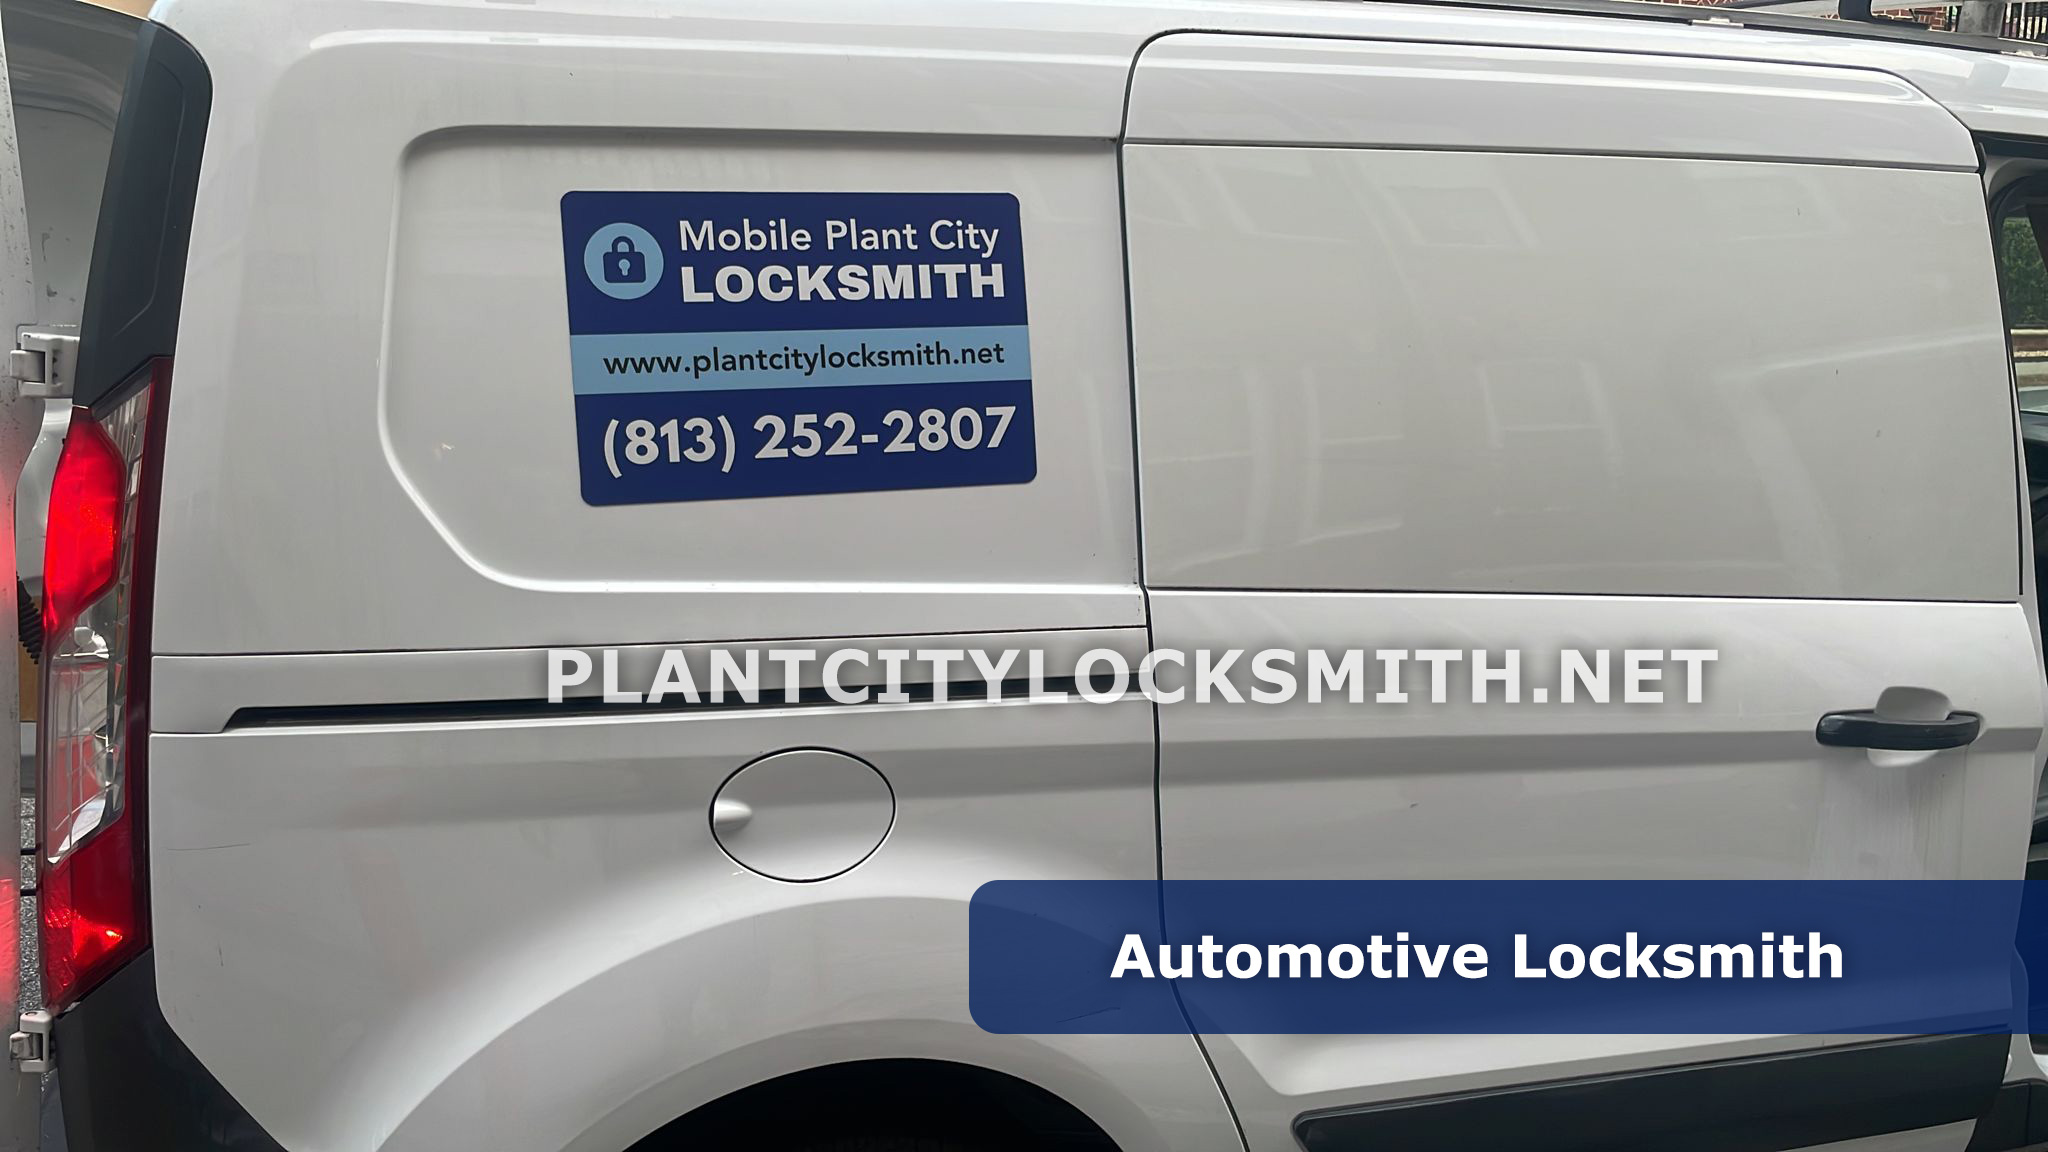 Mobile Plant City Locksmith